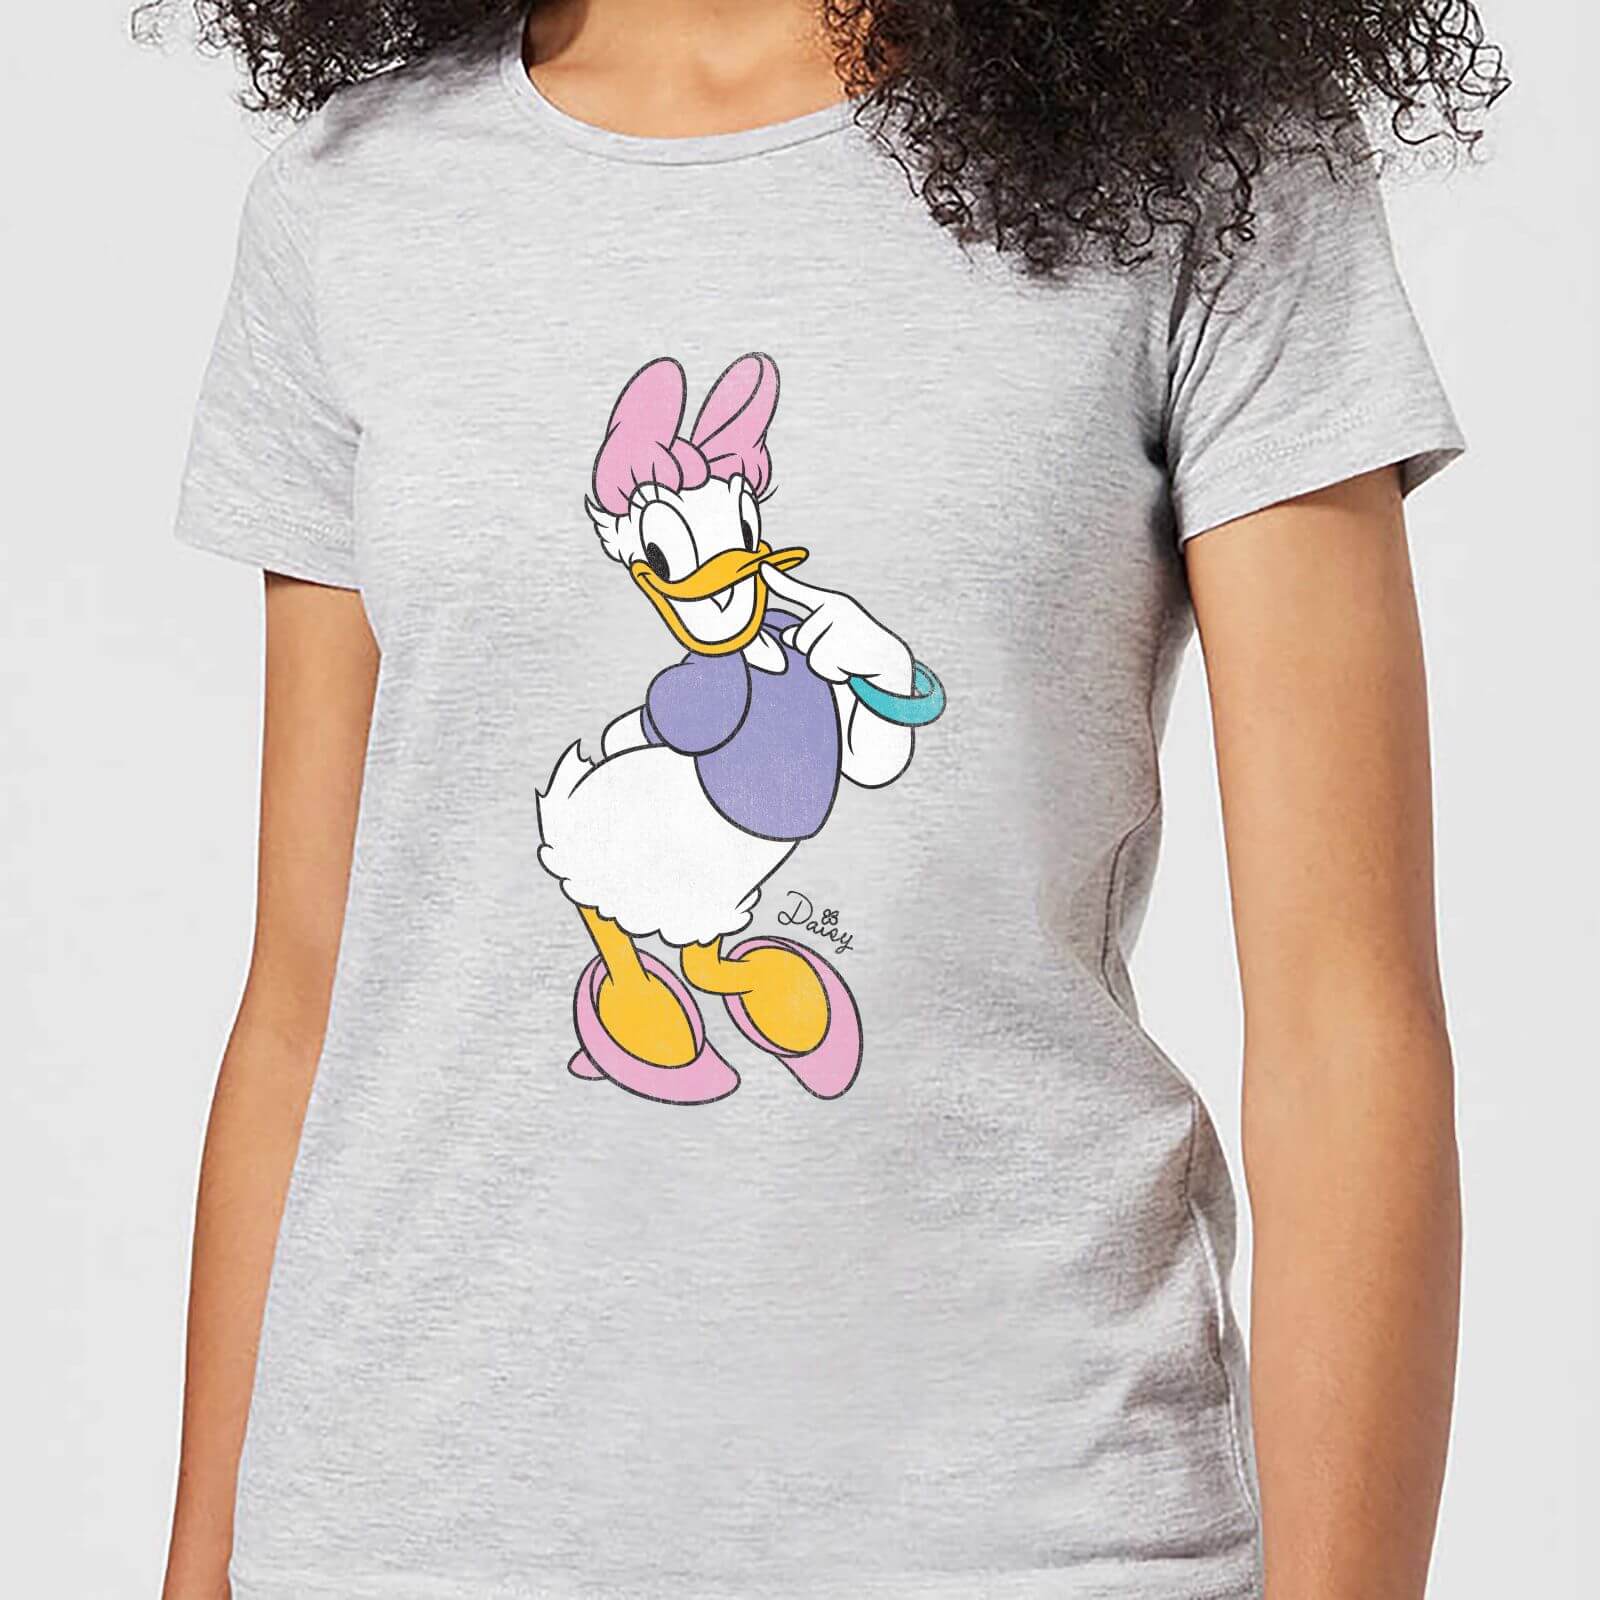 Disney Daisy Duck Classic Women's T-Shirt - Grey - M